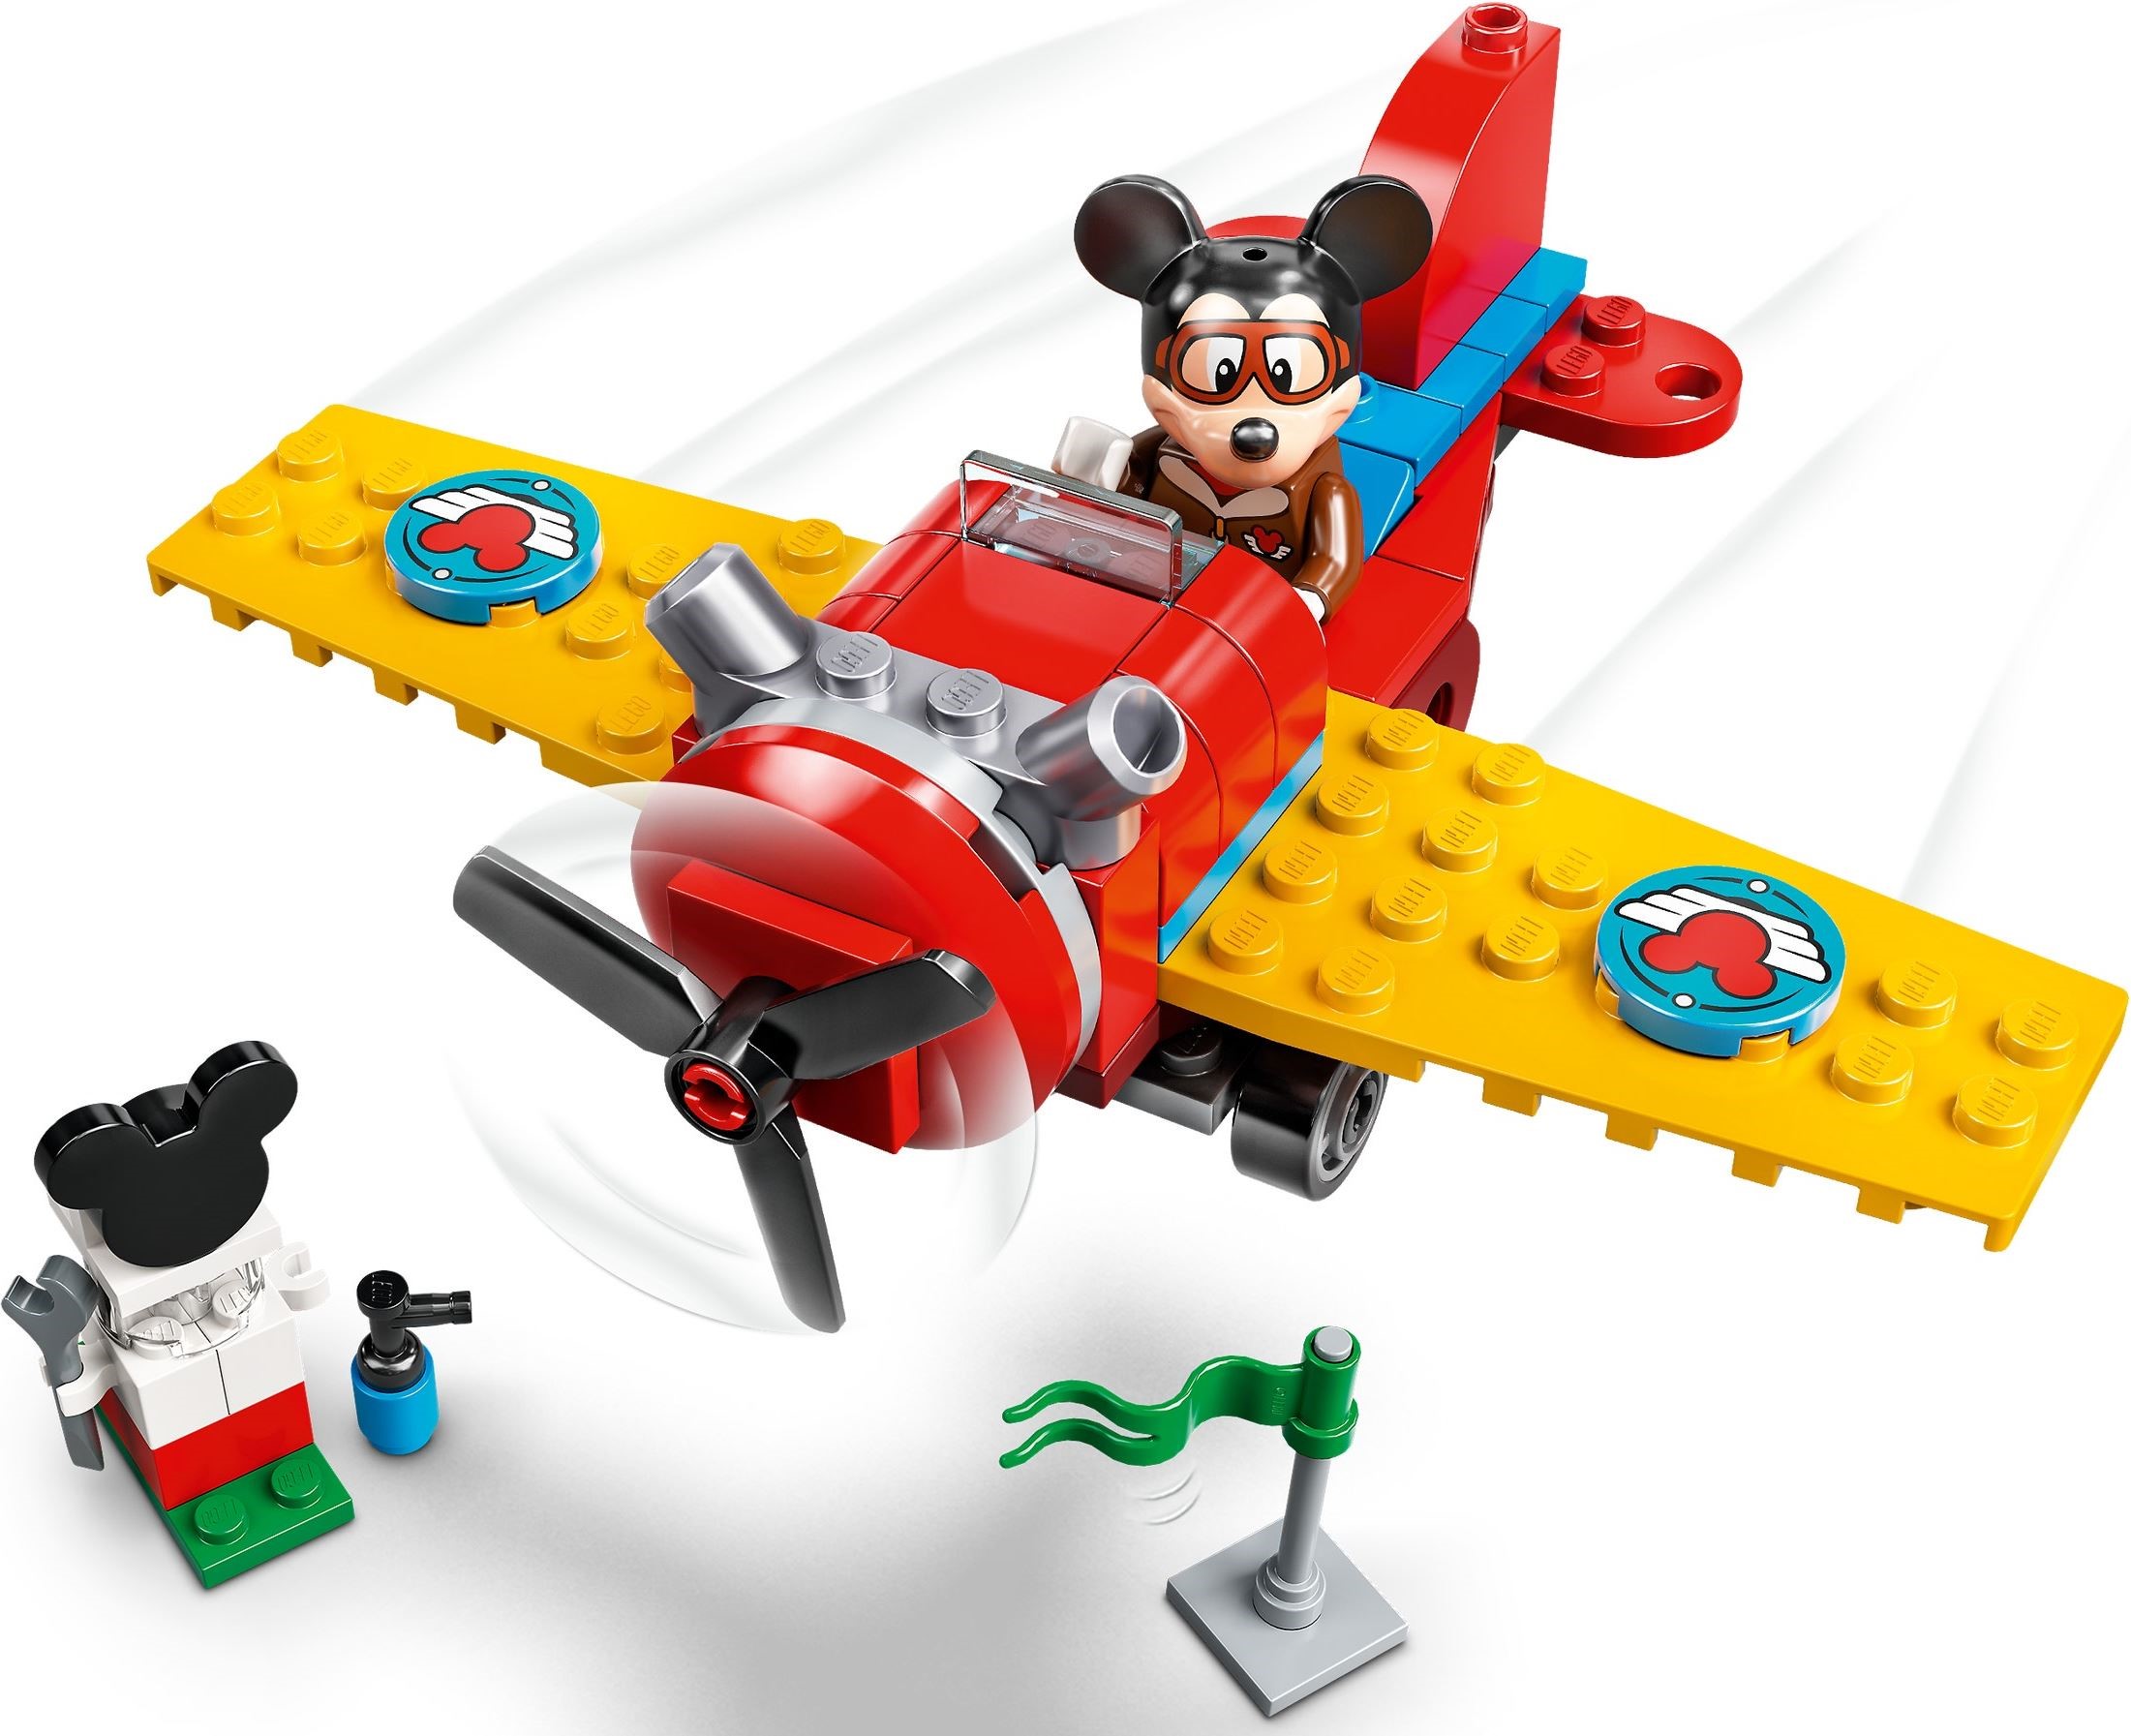 LEGO® Disney 10772 - Mickys Propellerflugzeug